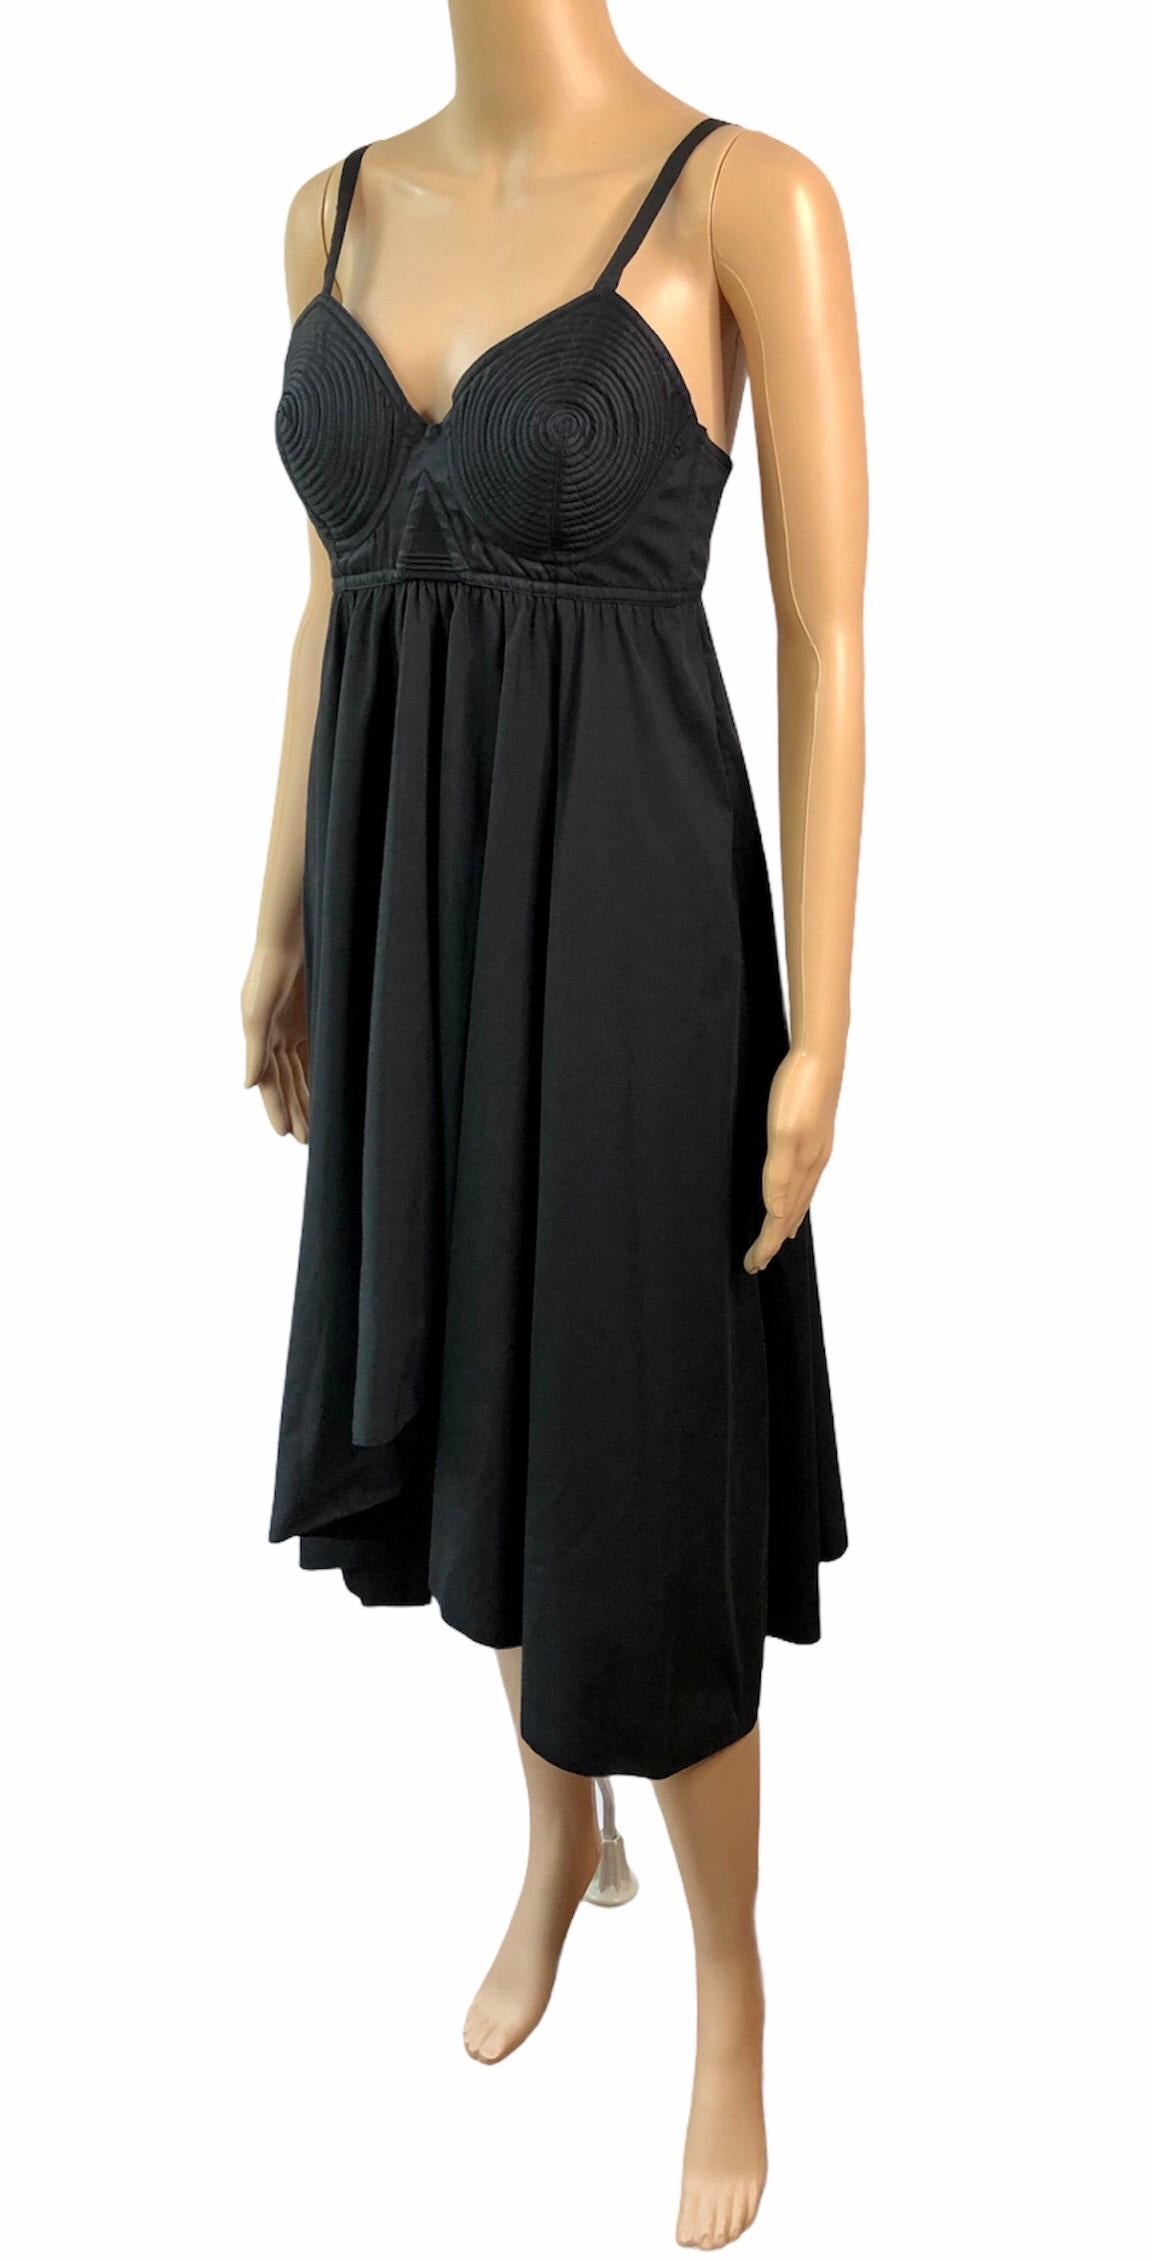 Jean Paul Gaultier Spring 2010 Cone Bra Black Dress  For Sale 2